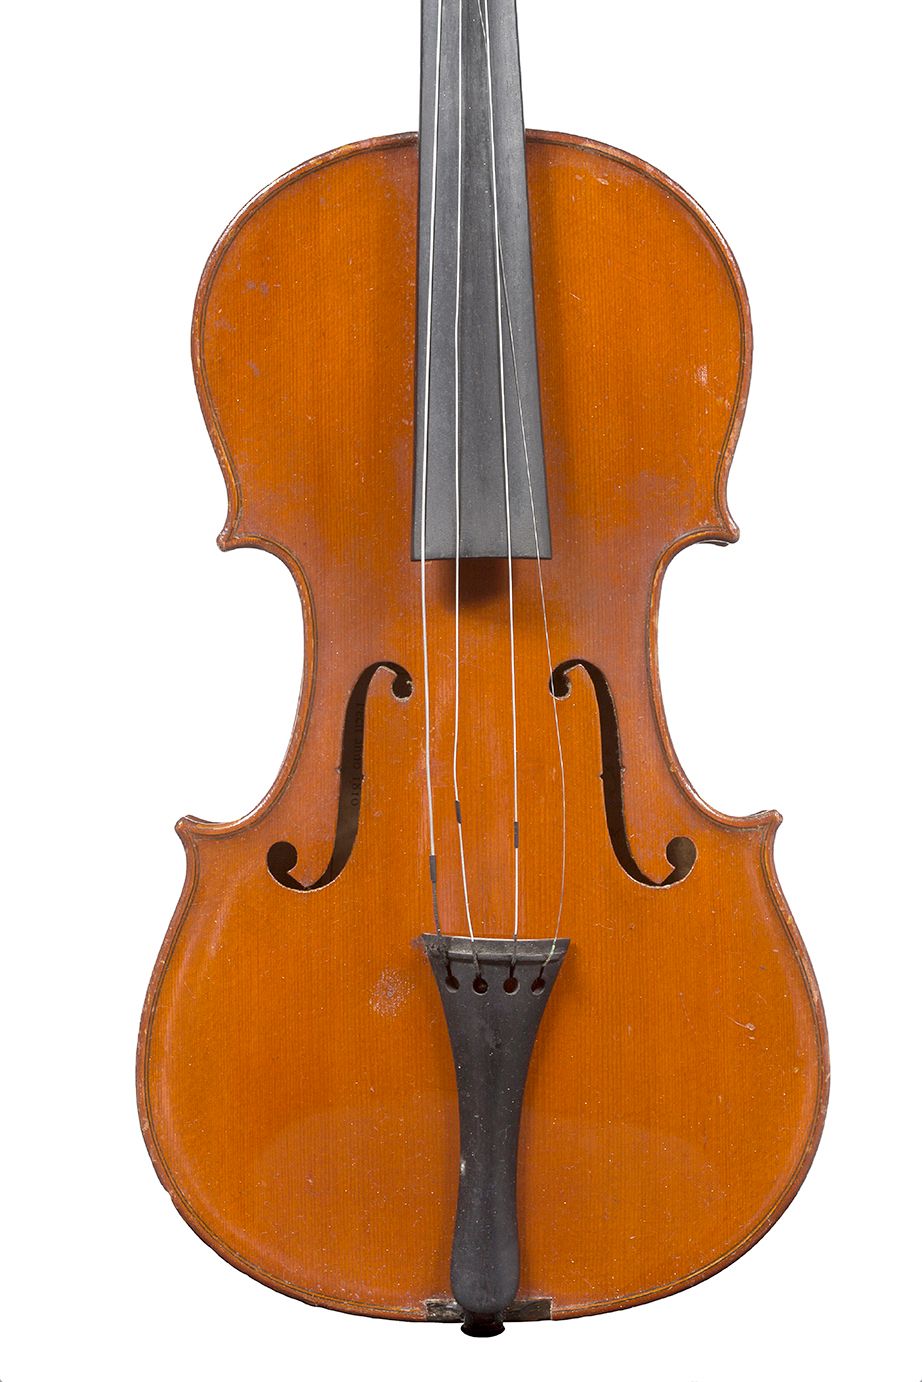 Null 米勒库尔制造的3/4尺寸小提琴
20世纪初
带有Nicolas Bertholini的标签
状况良好 
背面有336毫米